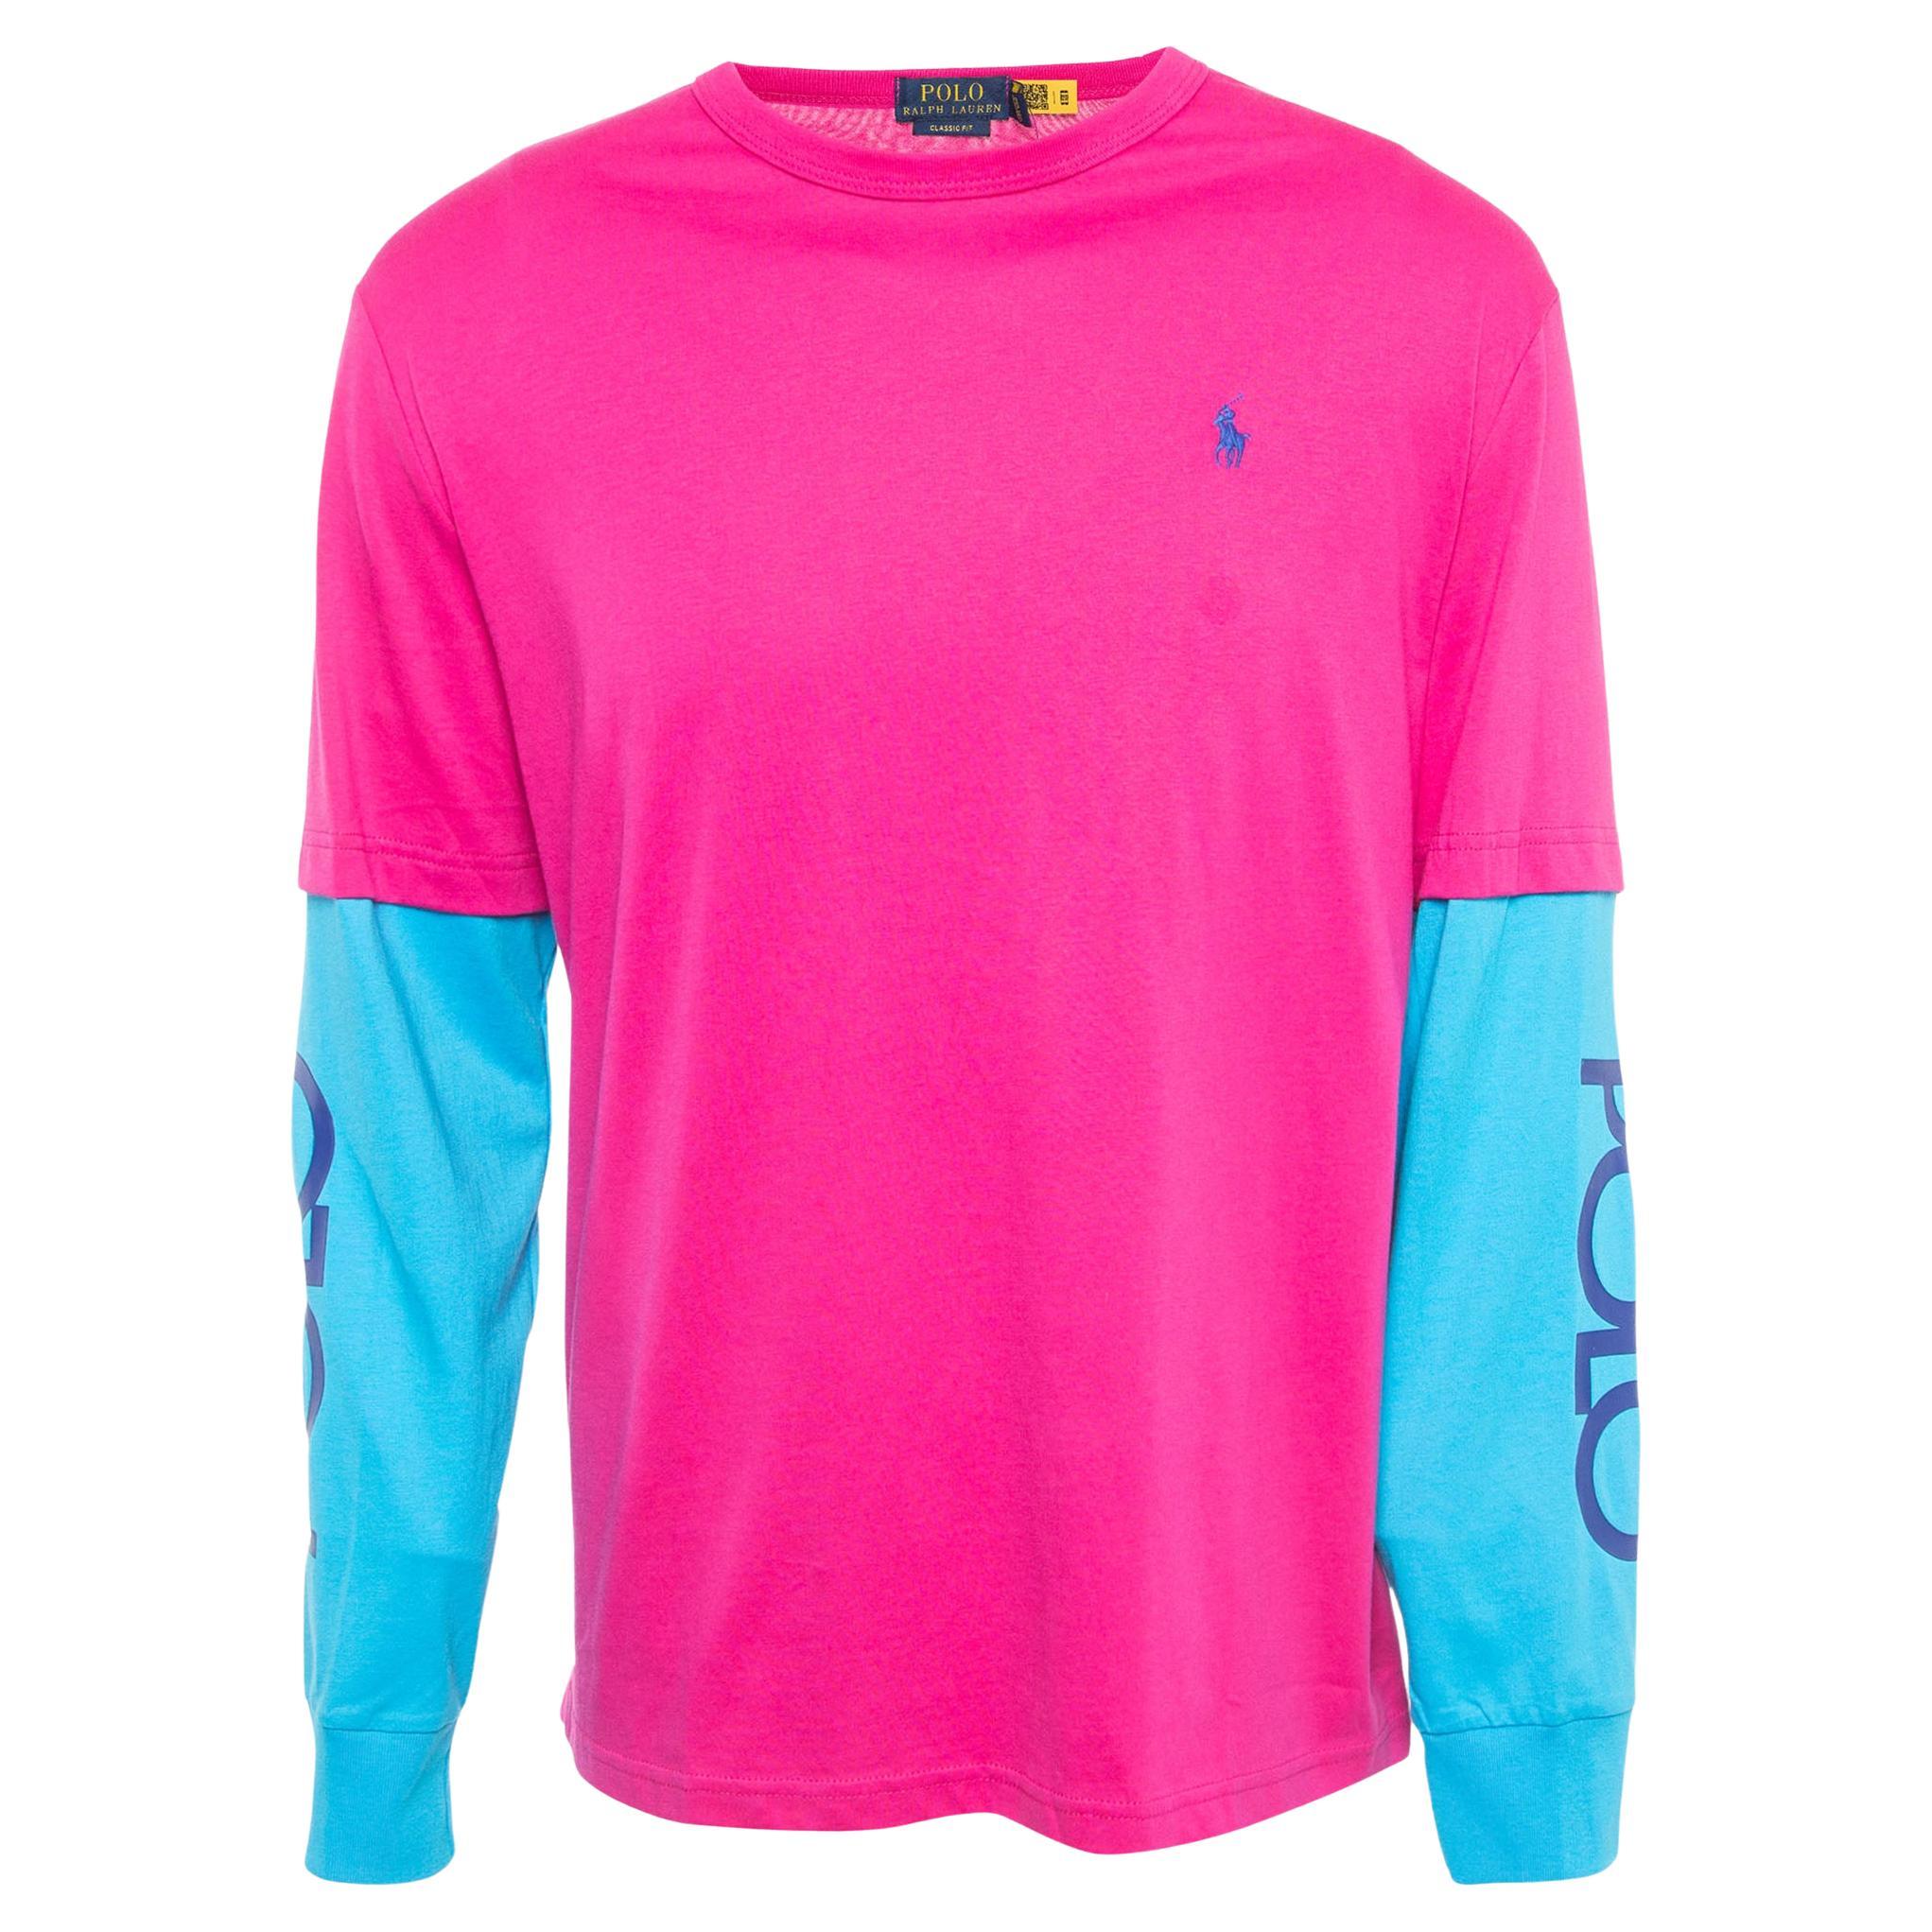 Polo Ralph Lauren Pink/Blue Cotton Classic Fit Long Sleeve T-Shirt M For Sale